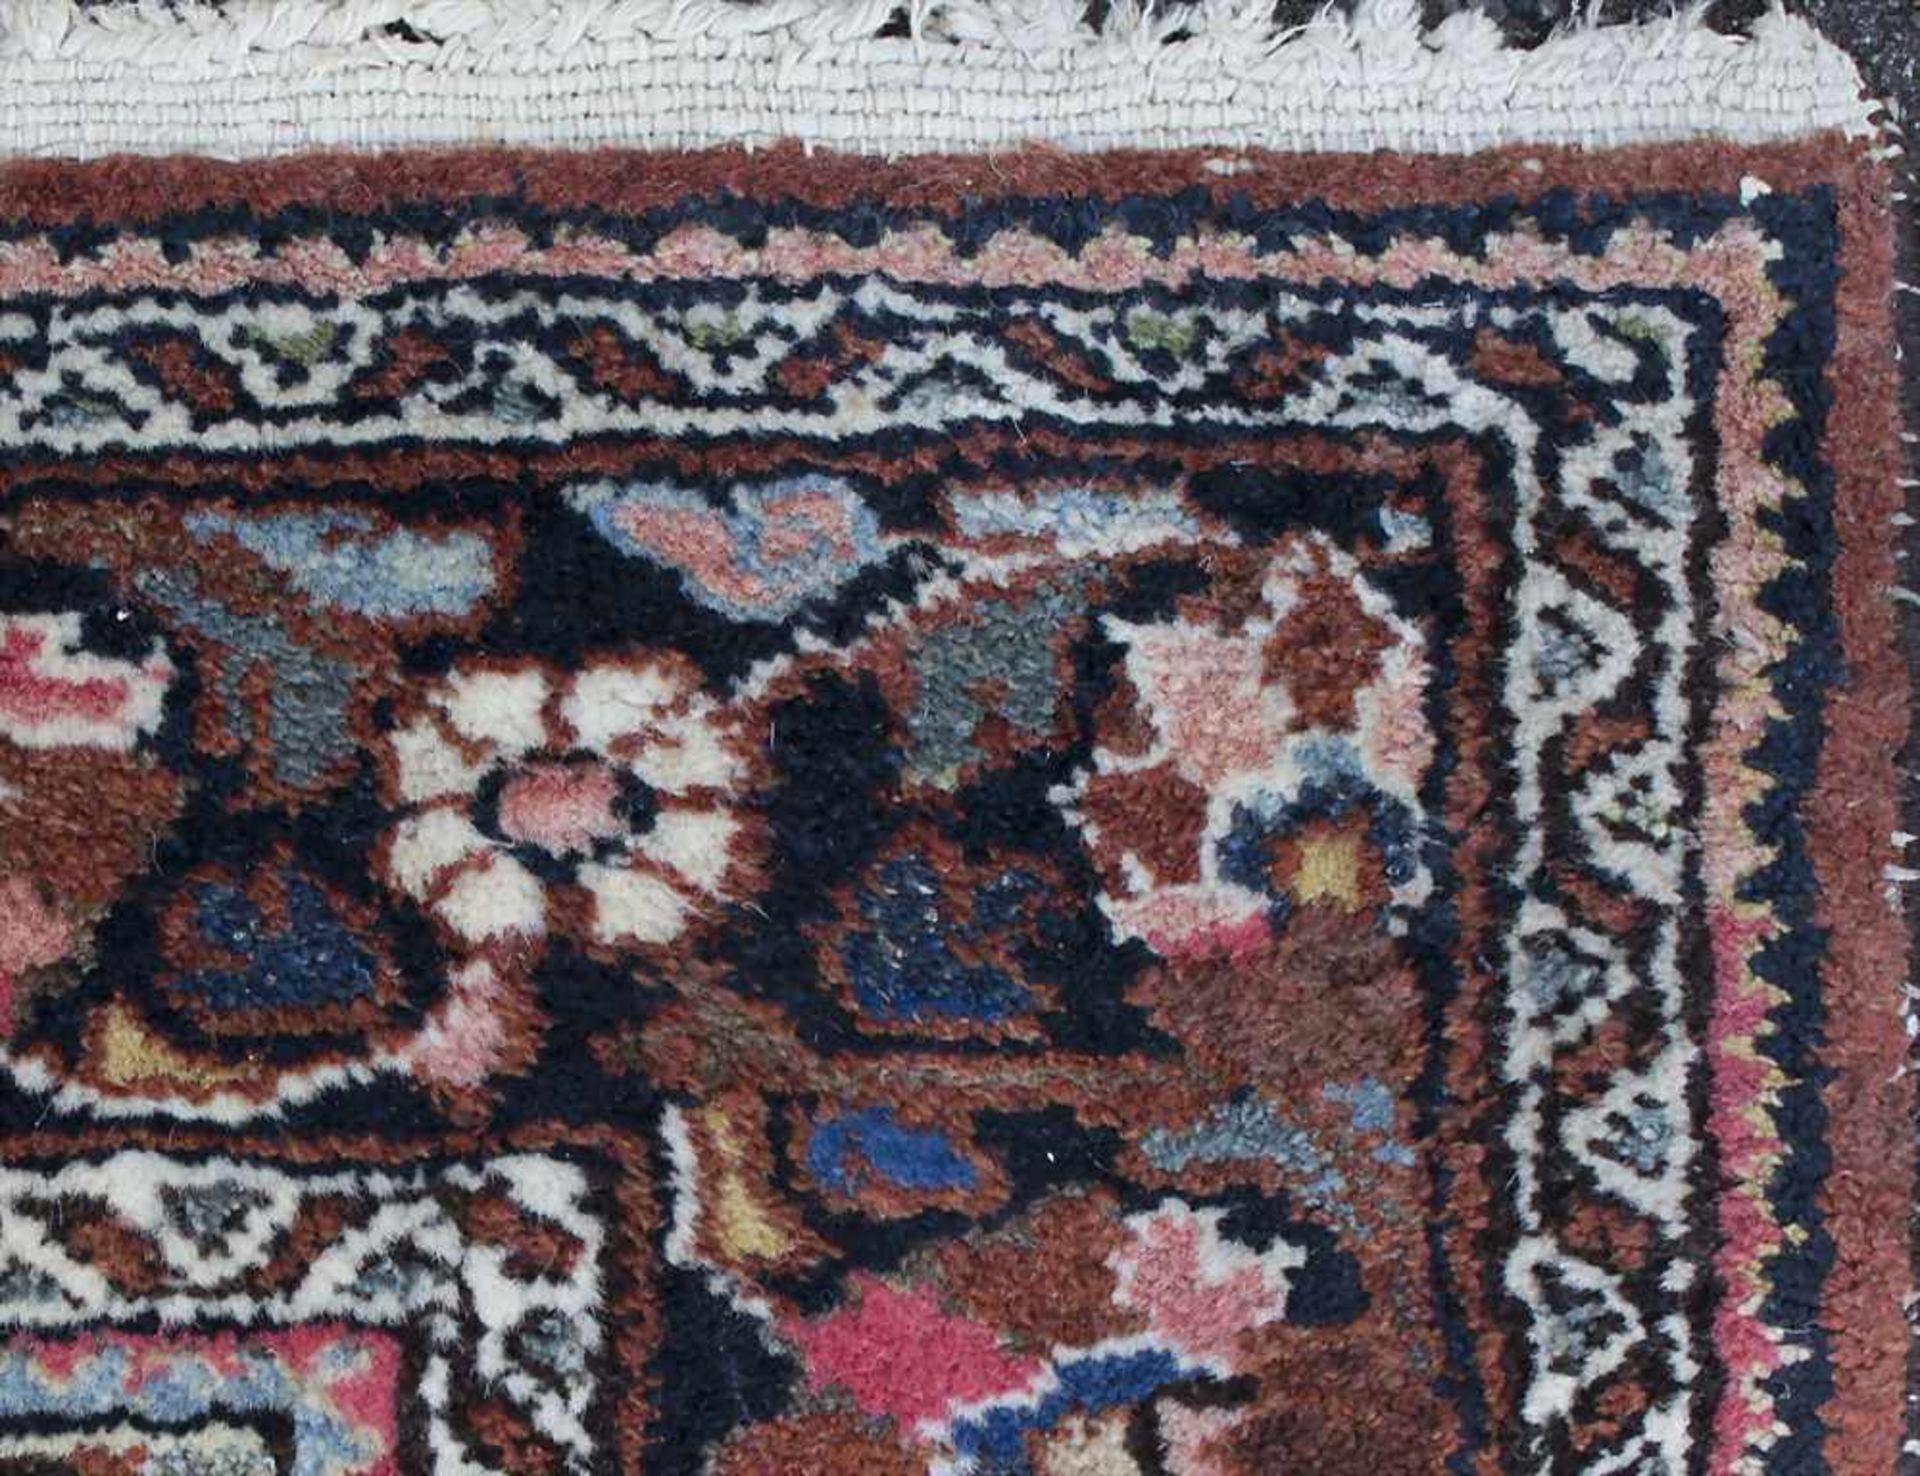 Orientteppich / An oriental carpetMaterial: Wolle auf Wolle, Maße: 160 x 102 cm, Zustand: gut, - Image 3 of 5